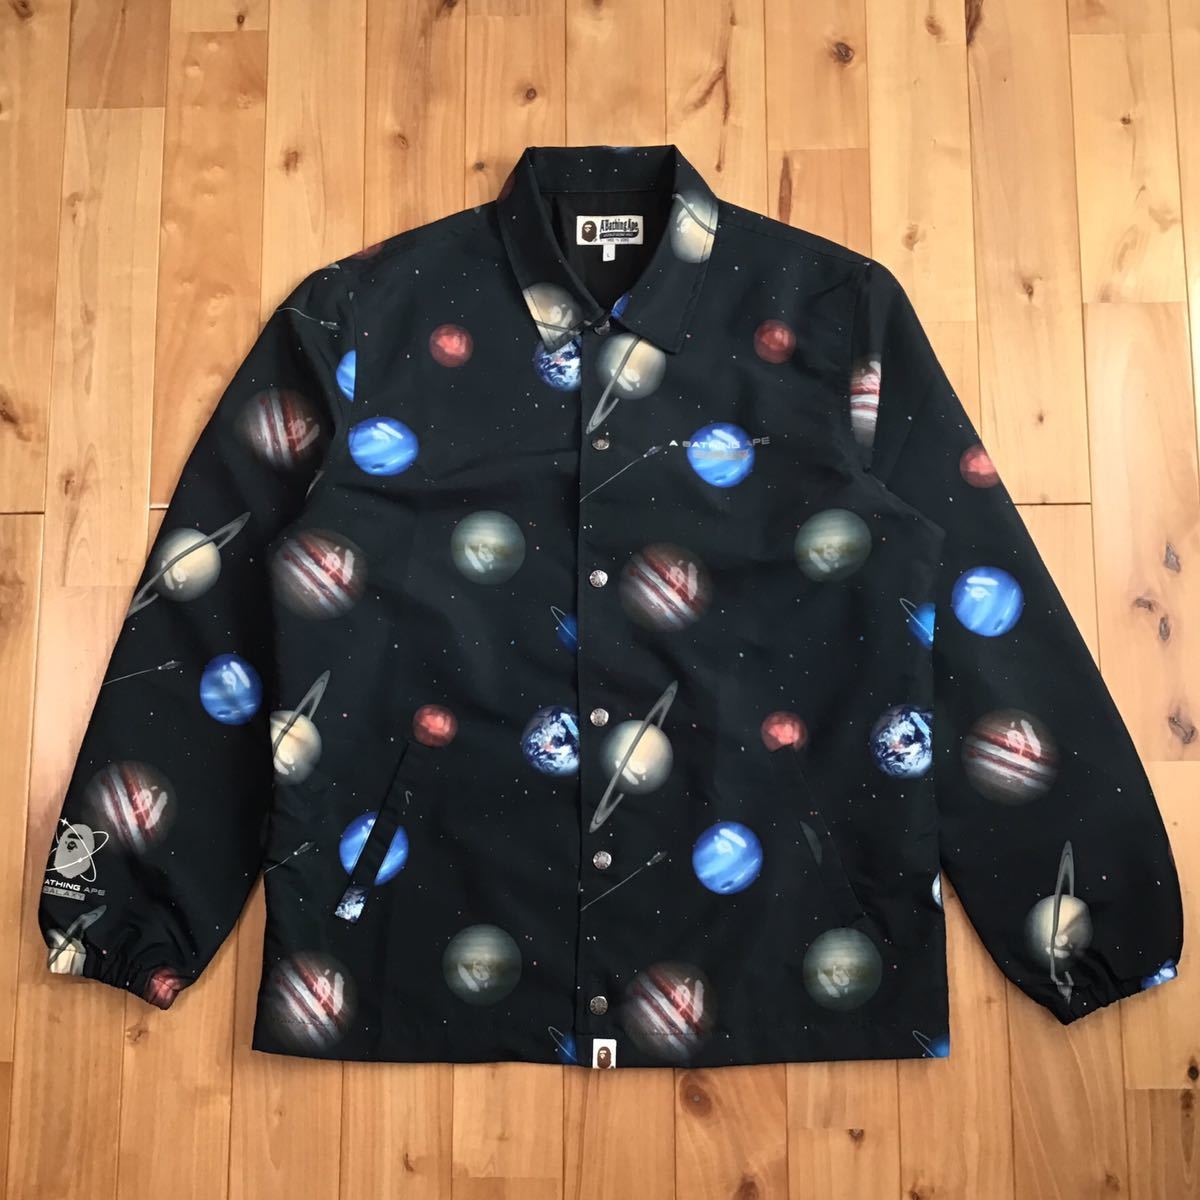 Galaxy coach jacket Lサイズ a bathing ape BAPE space cosmos エイプ ベイプ アベイシングエイプ コーチ ジャケット w9594_画像1